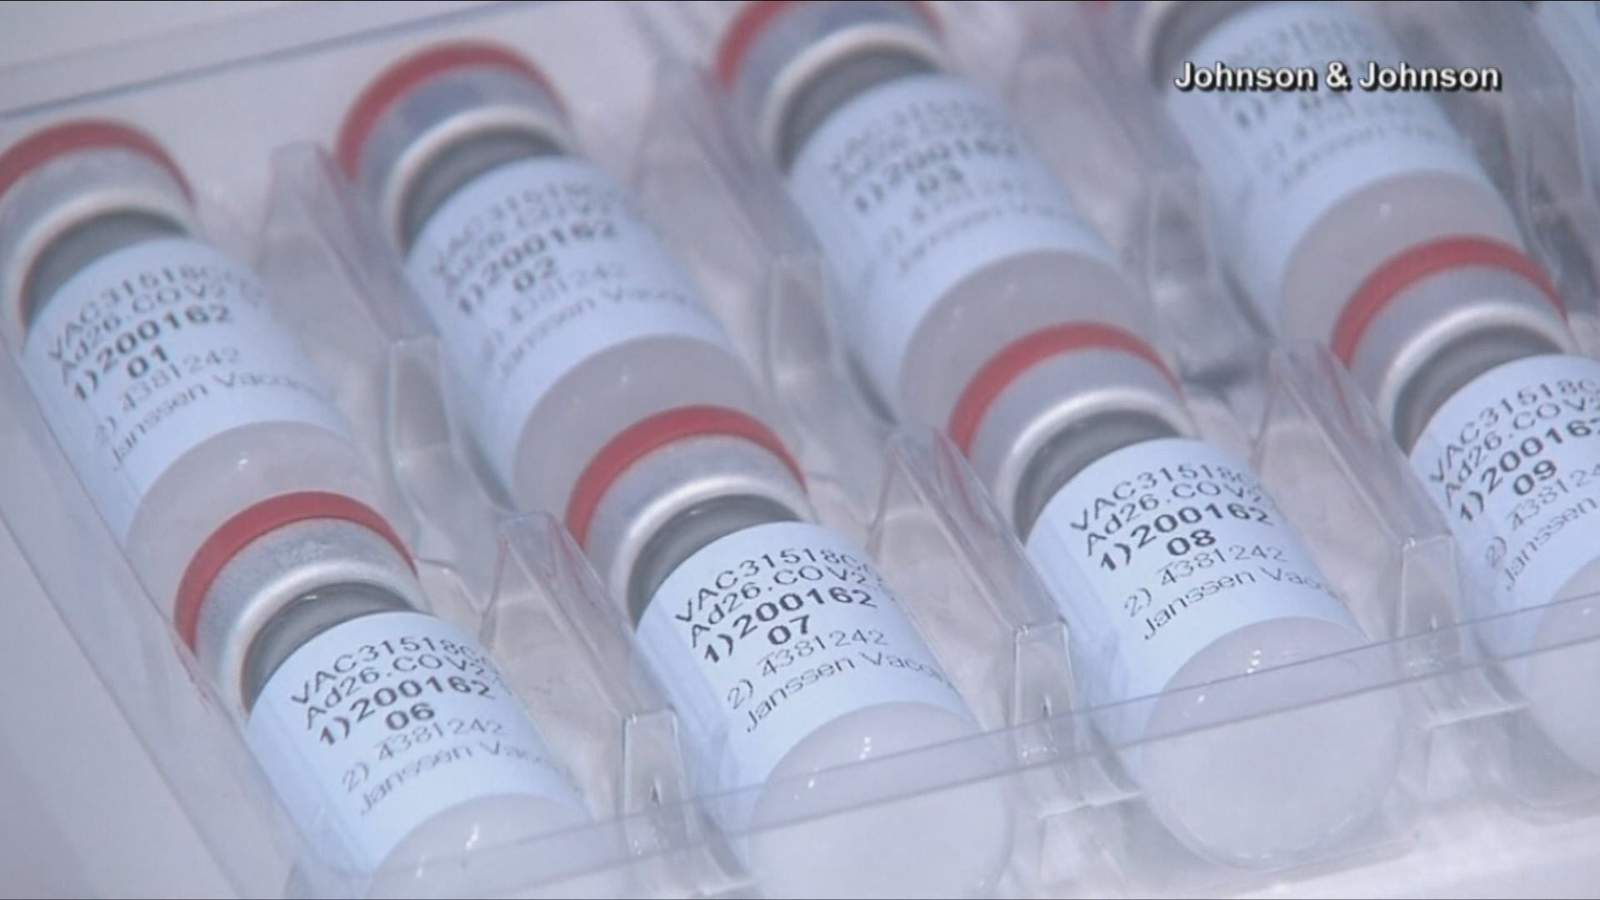 Houston Health closes waitlist for Johnson & Johnson COVID-19 vaccine